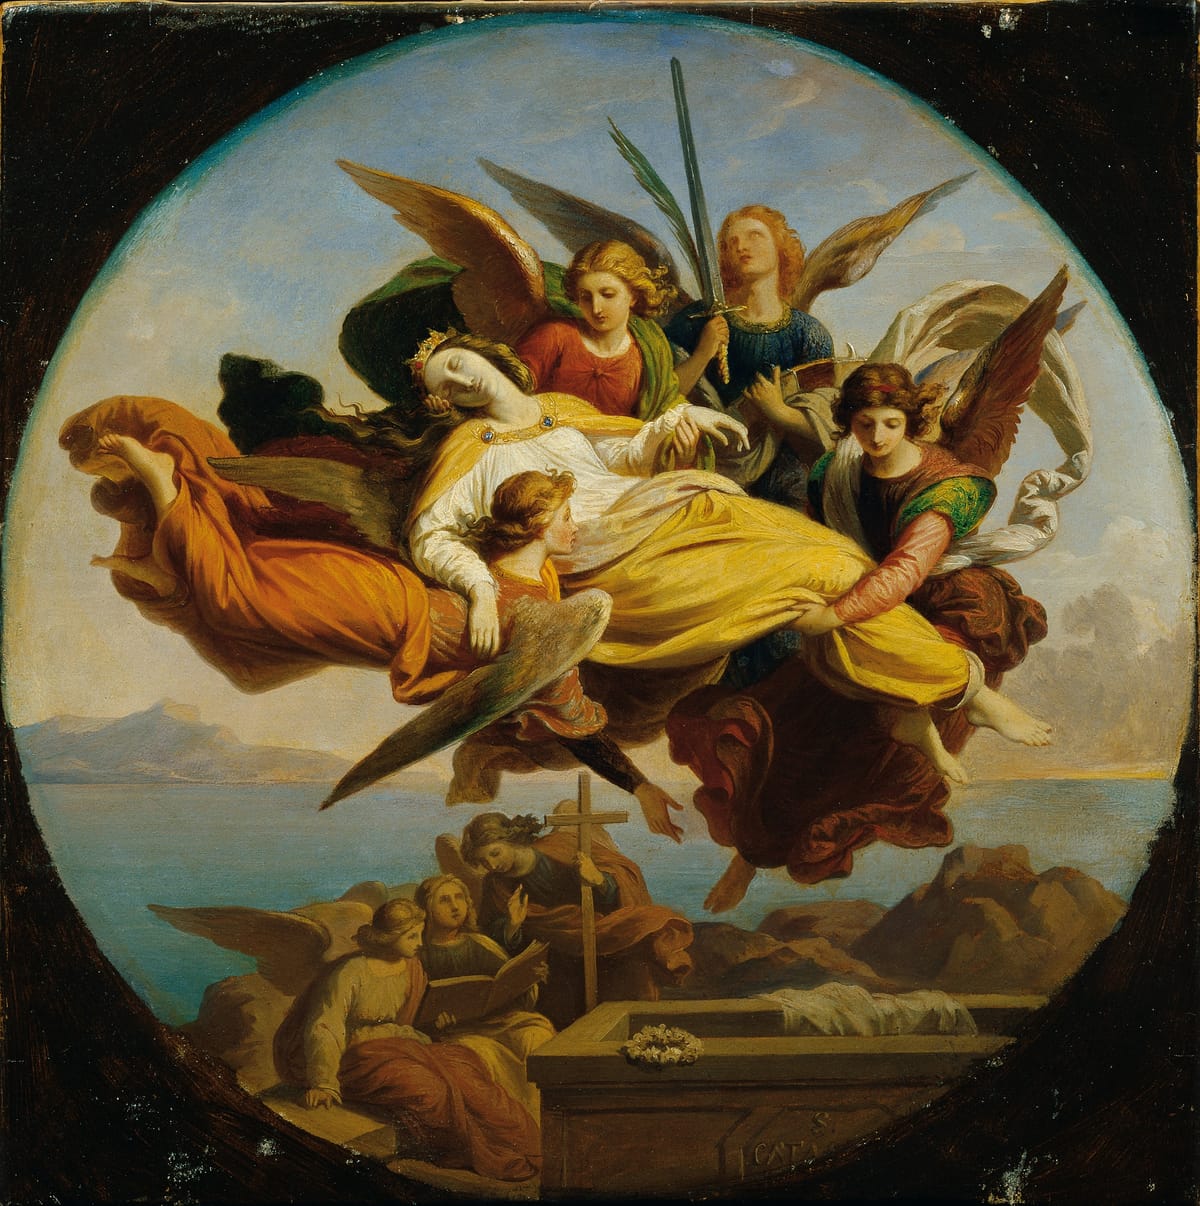 Die Heilige Katharina (1850) by Karl von Blaas (Austrian) - Public Domain Catholic Painting